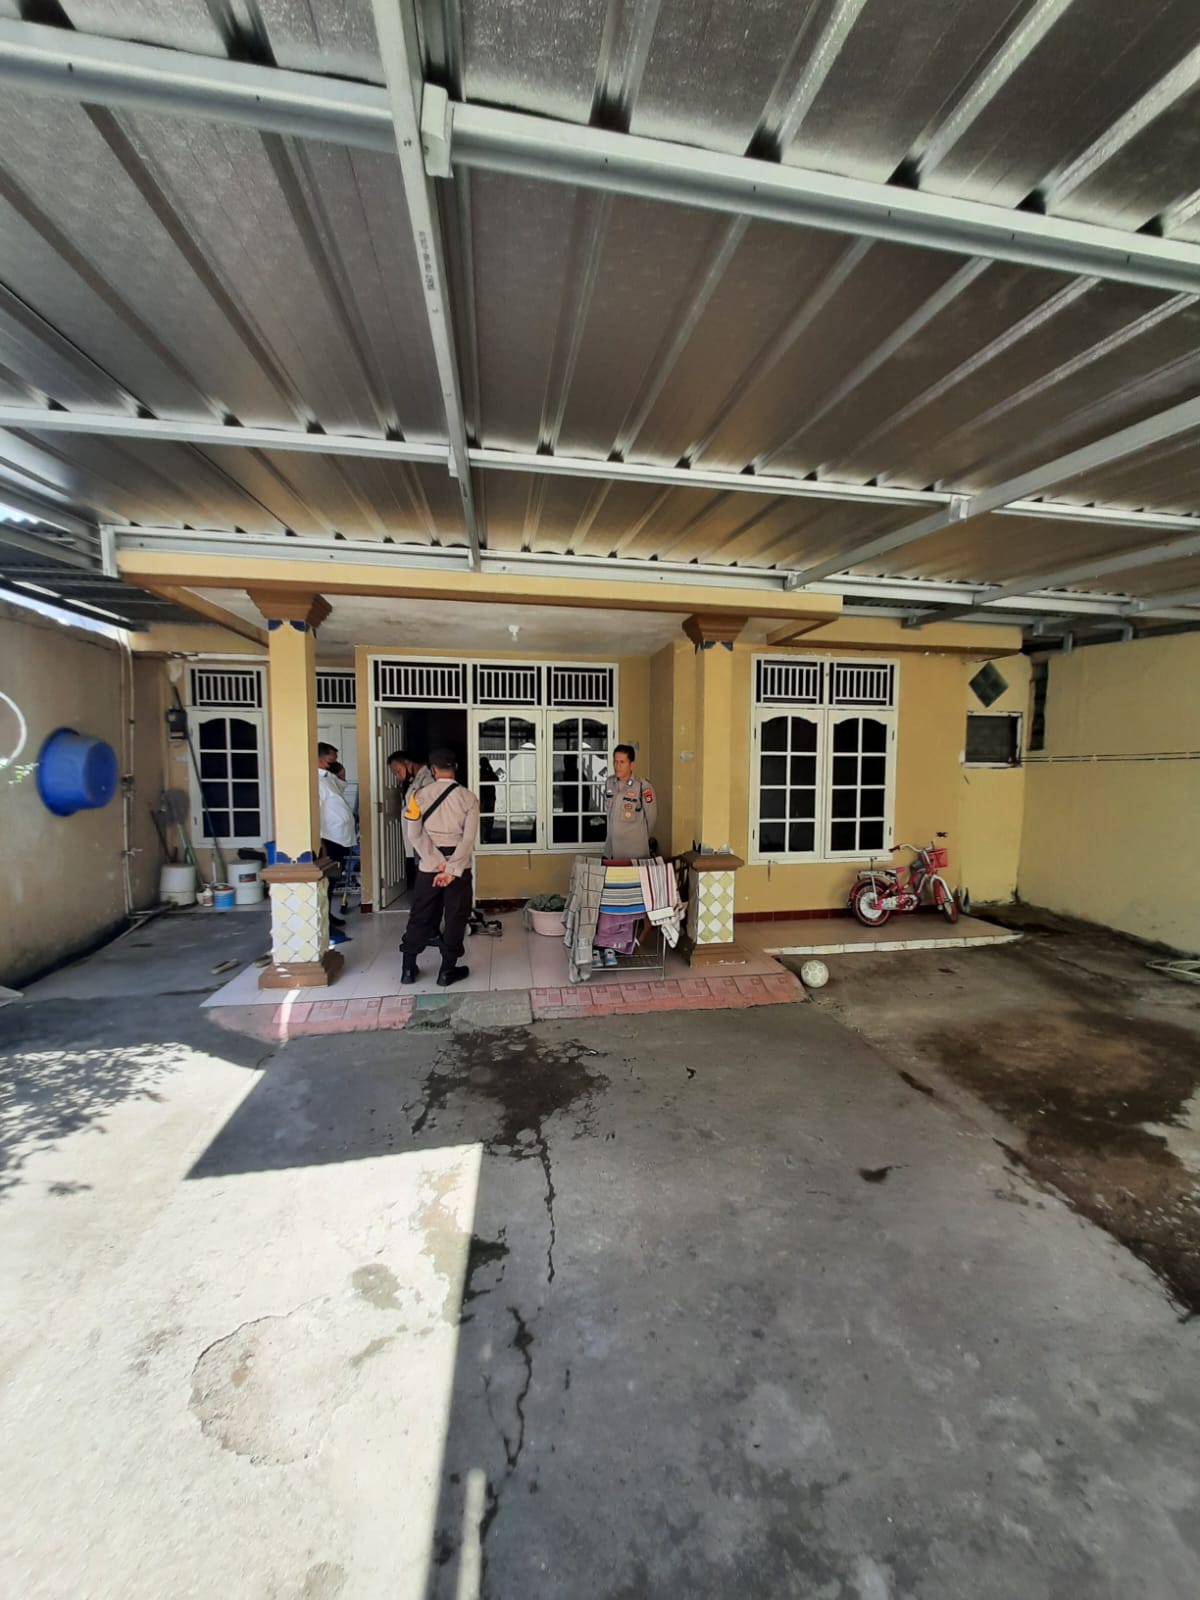 Ditinggal ke Pasar, Rumah Warga di Jalan Punai Disatroni Maling